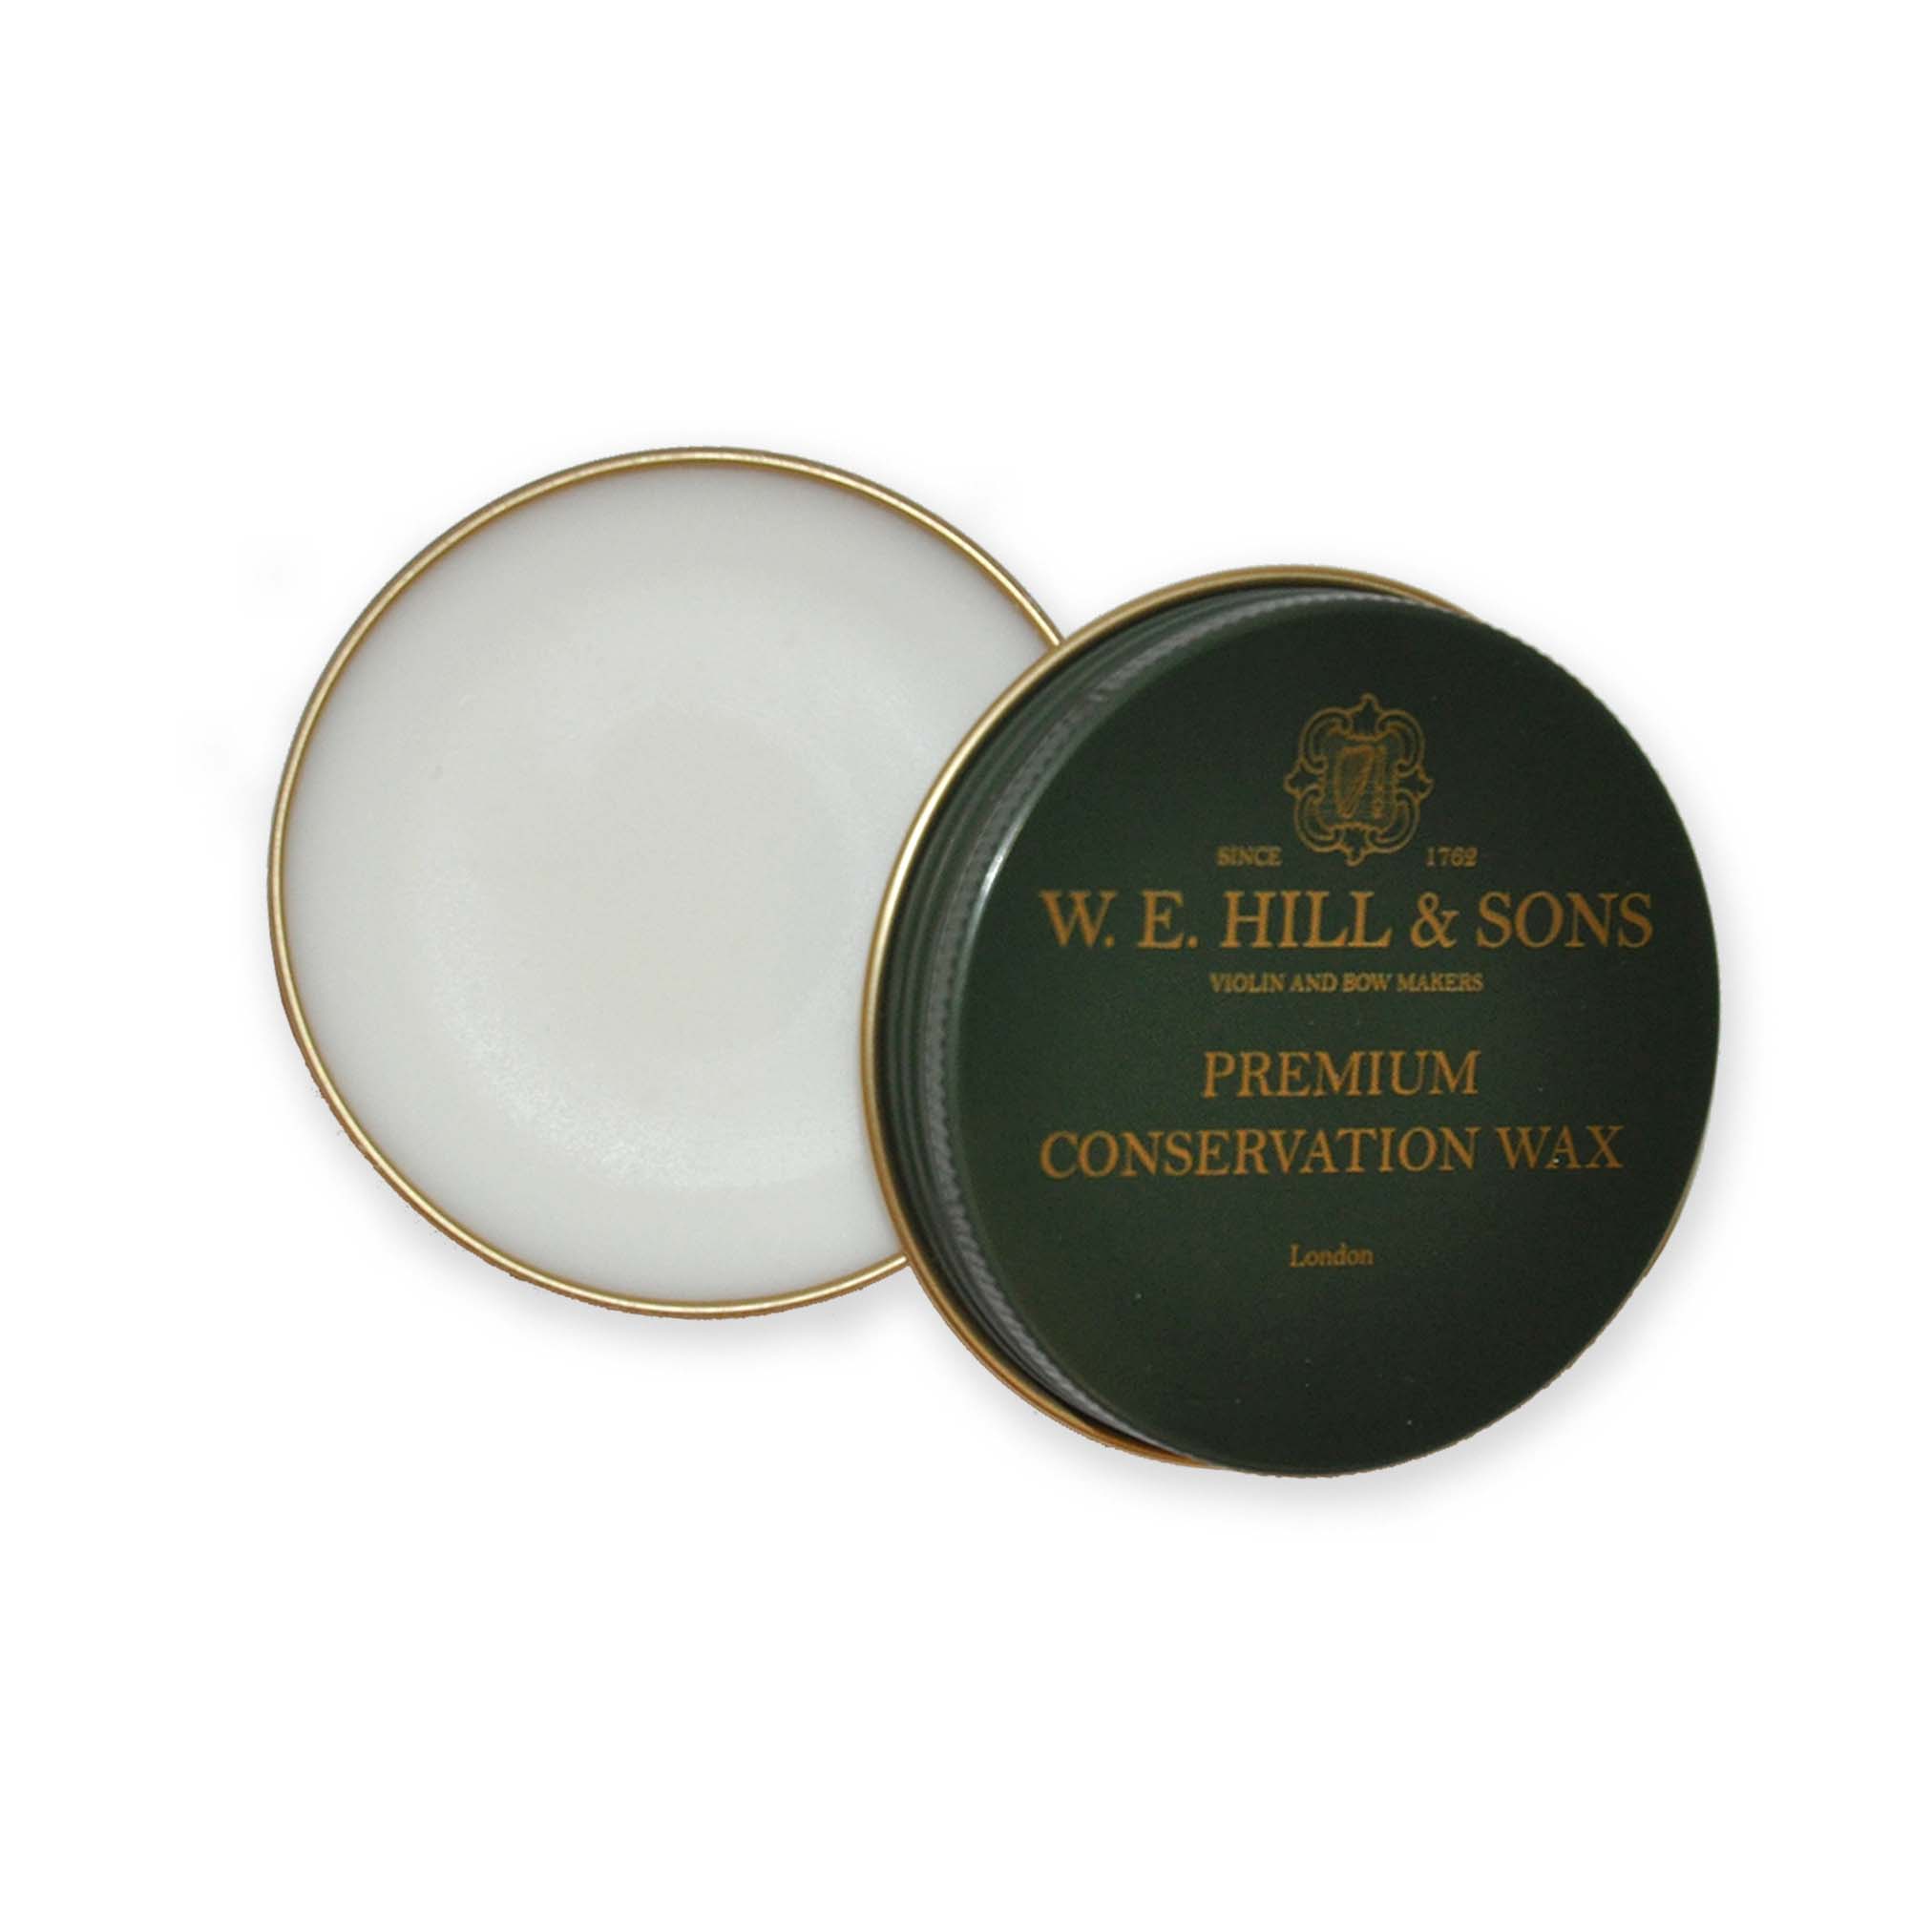 W.E. Hill & Sons Premium Conservation Wax